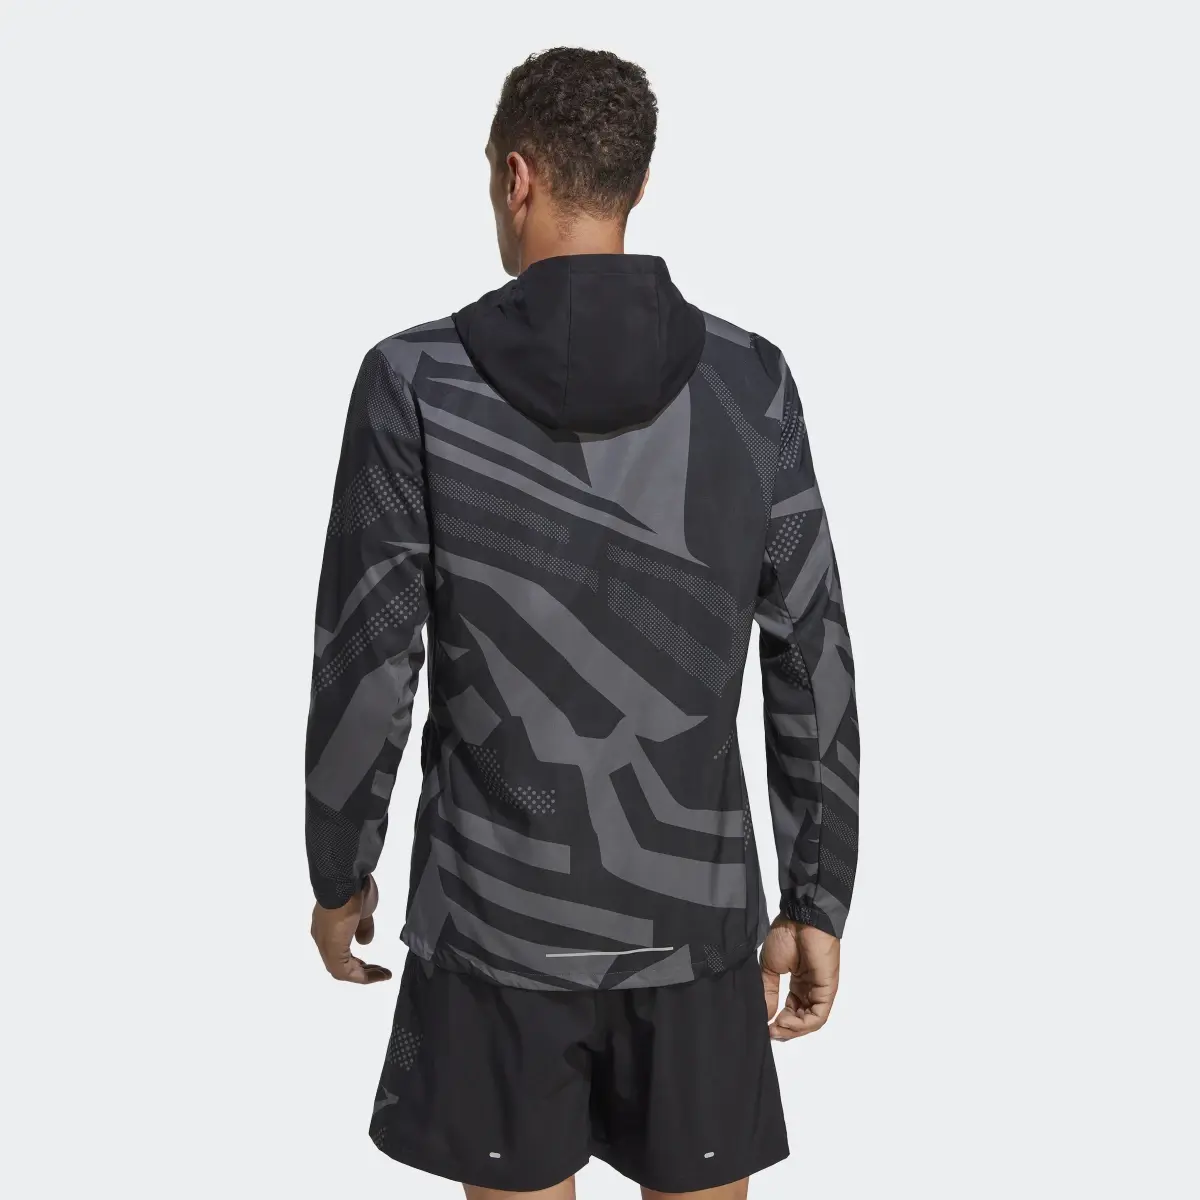 Adidas Own the Run Seasonal Jacket. 3